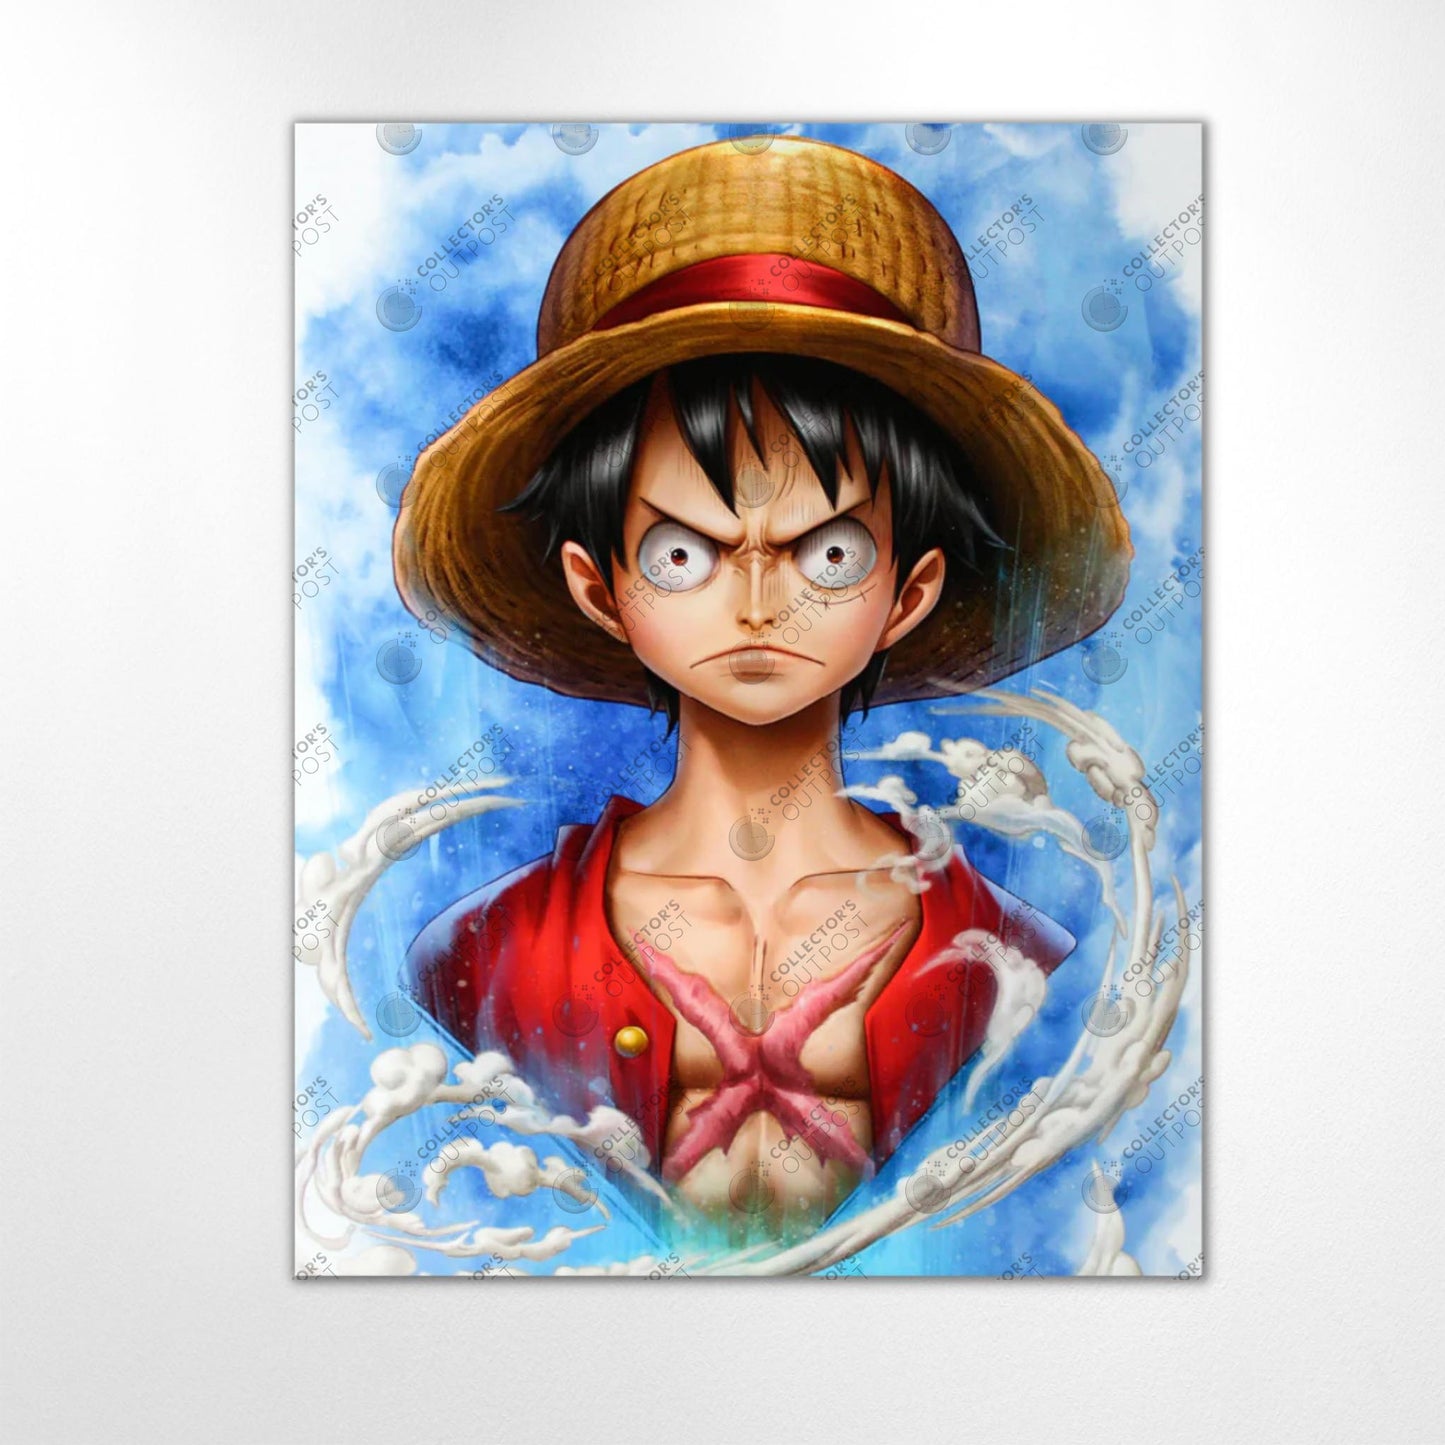 Monkey D Luffy Gear 5 - One Piece anime, an art print by Anime Sekai -  INPRNT